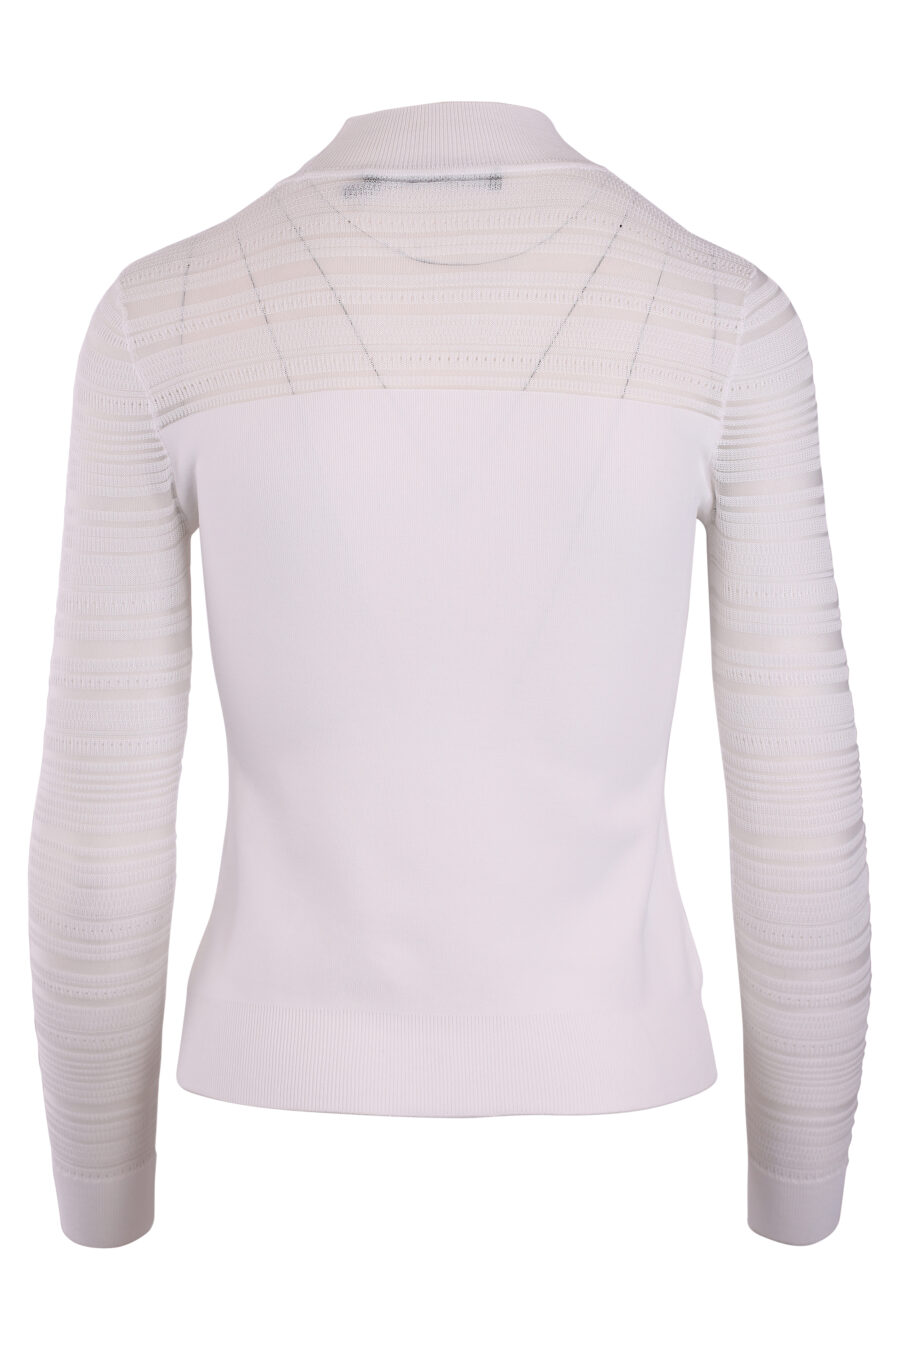 Semitransparent long sleeve white T-shirt - IMG 3262